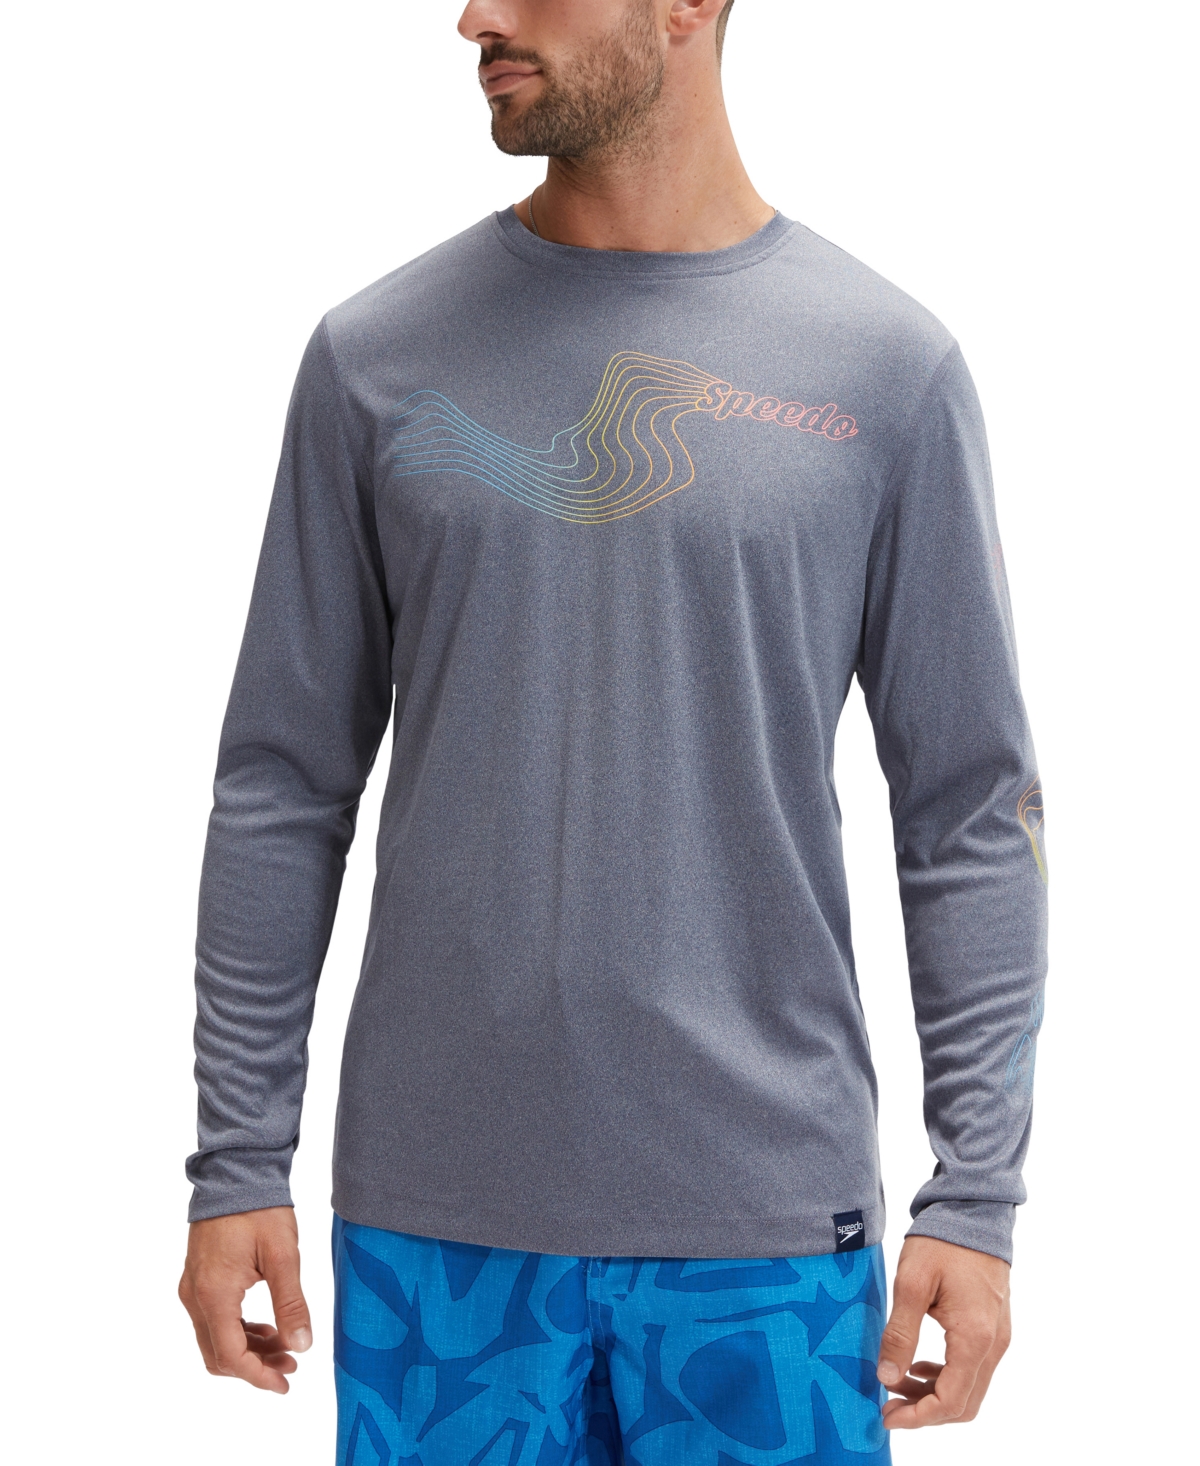 Men's Long Sleeve Performance Graphic Swim Shirt - Peacoat